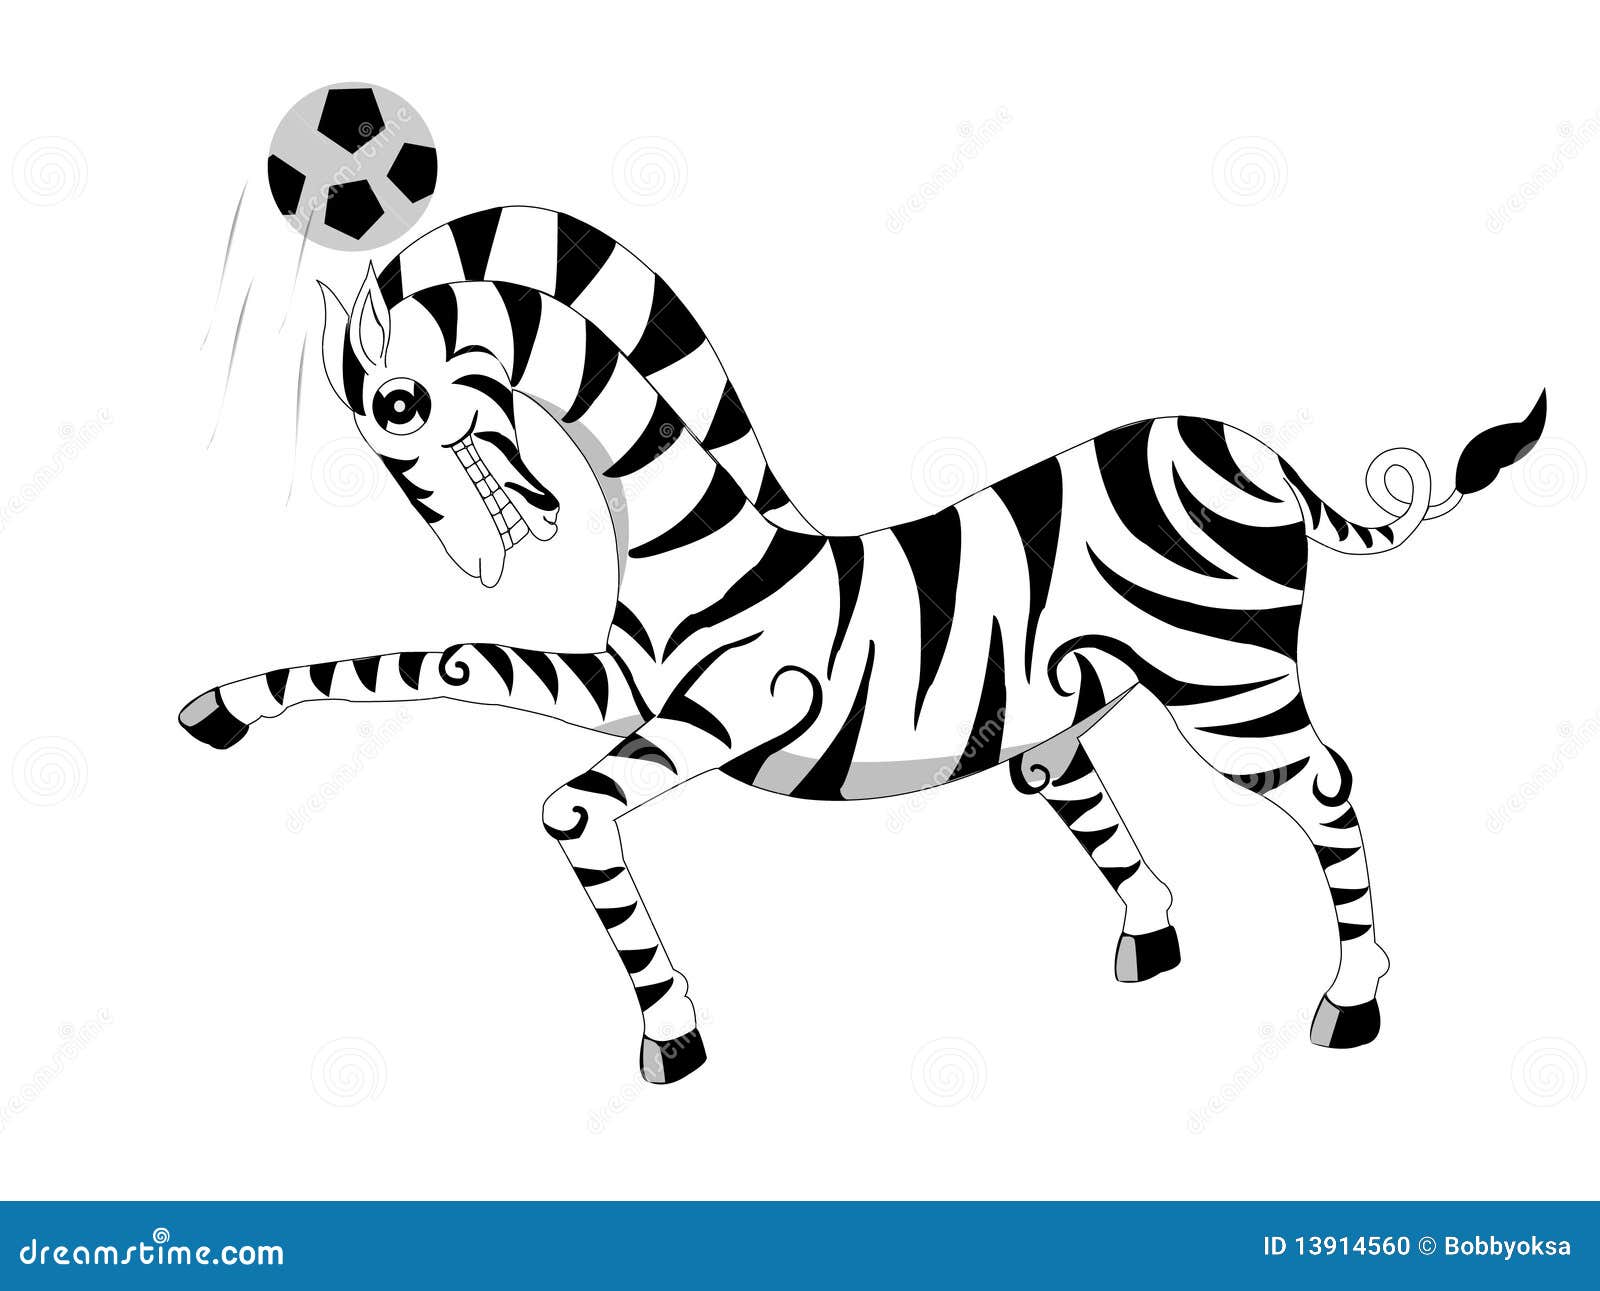 zebra-football-13914560.jpg